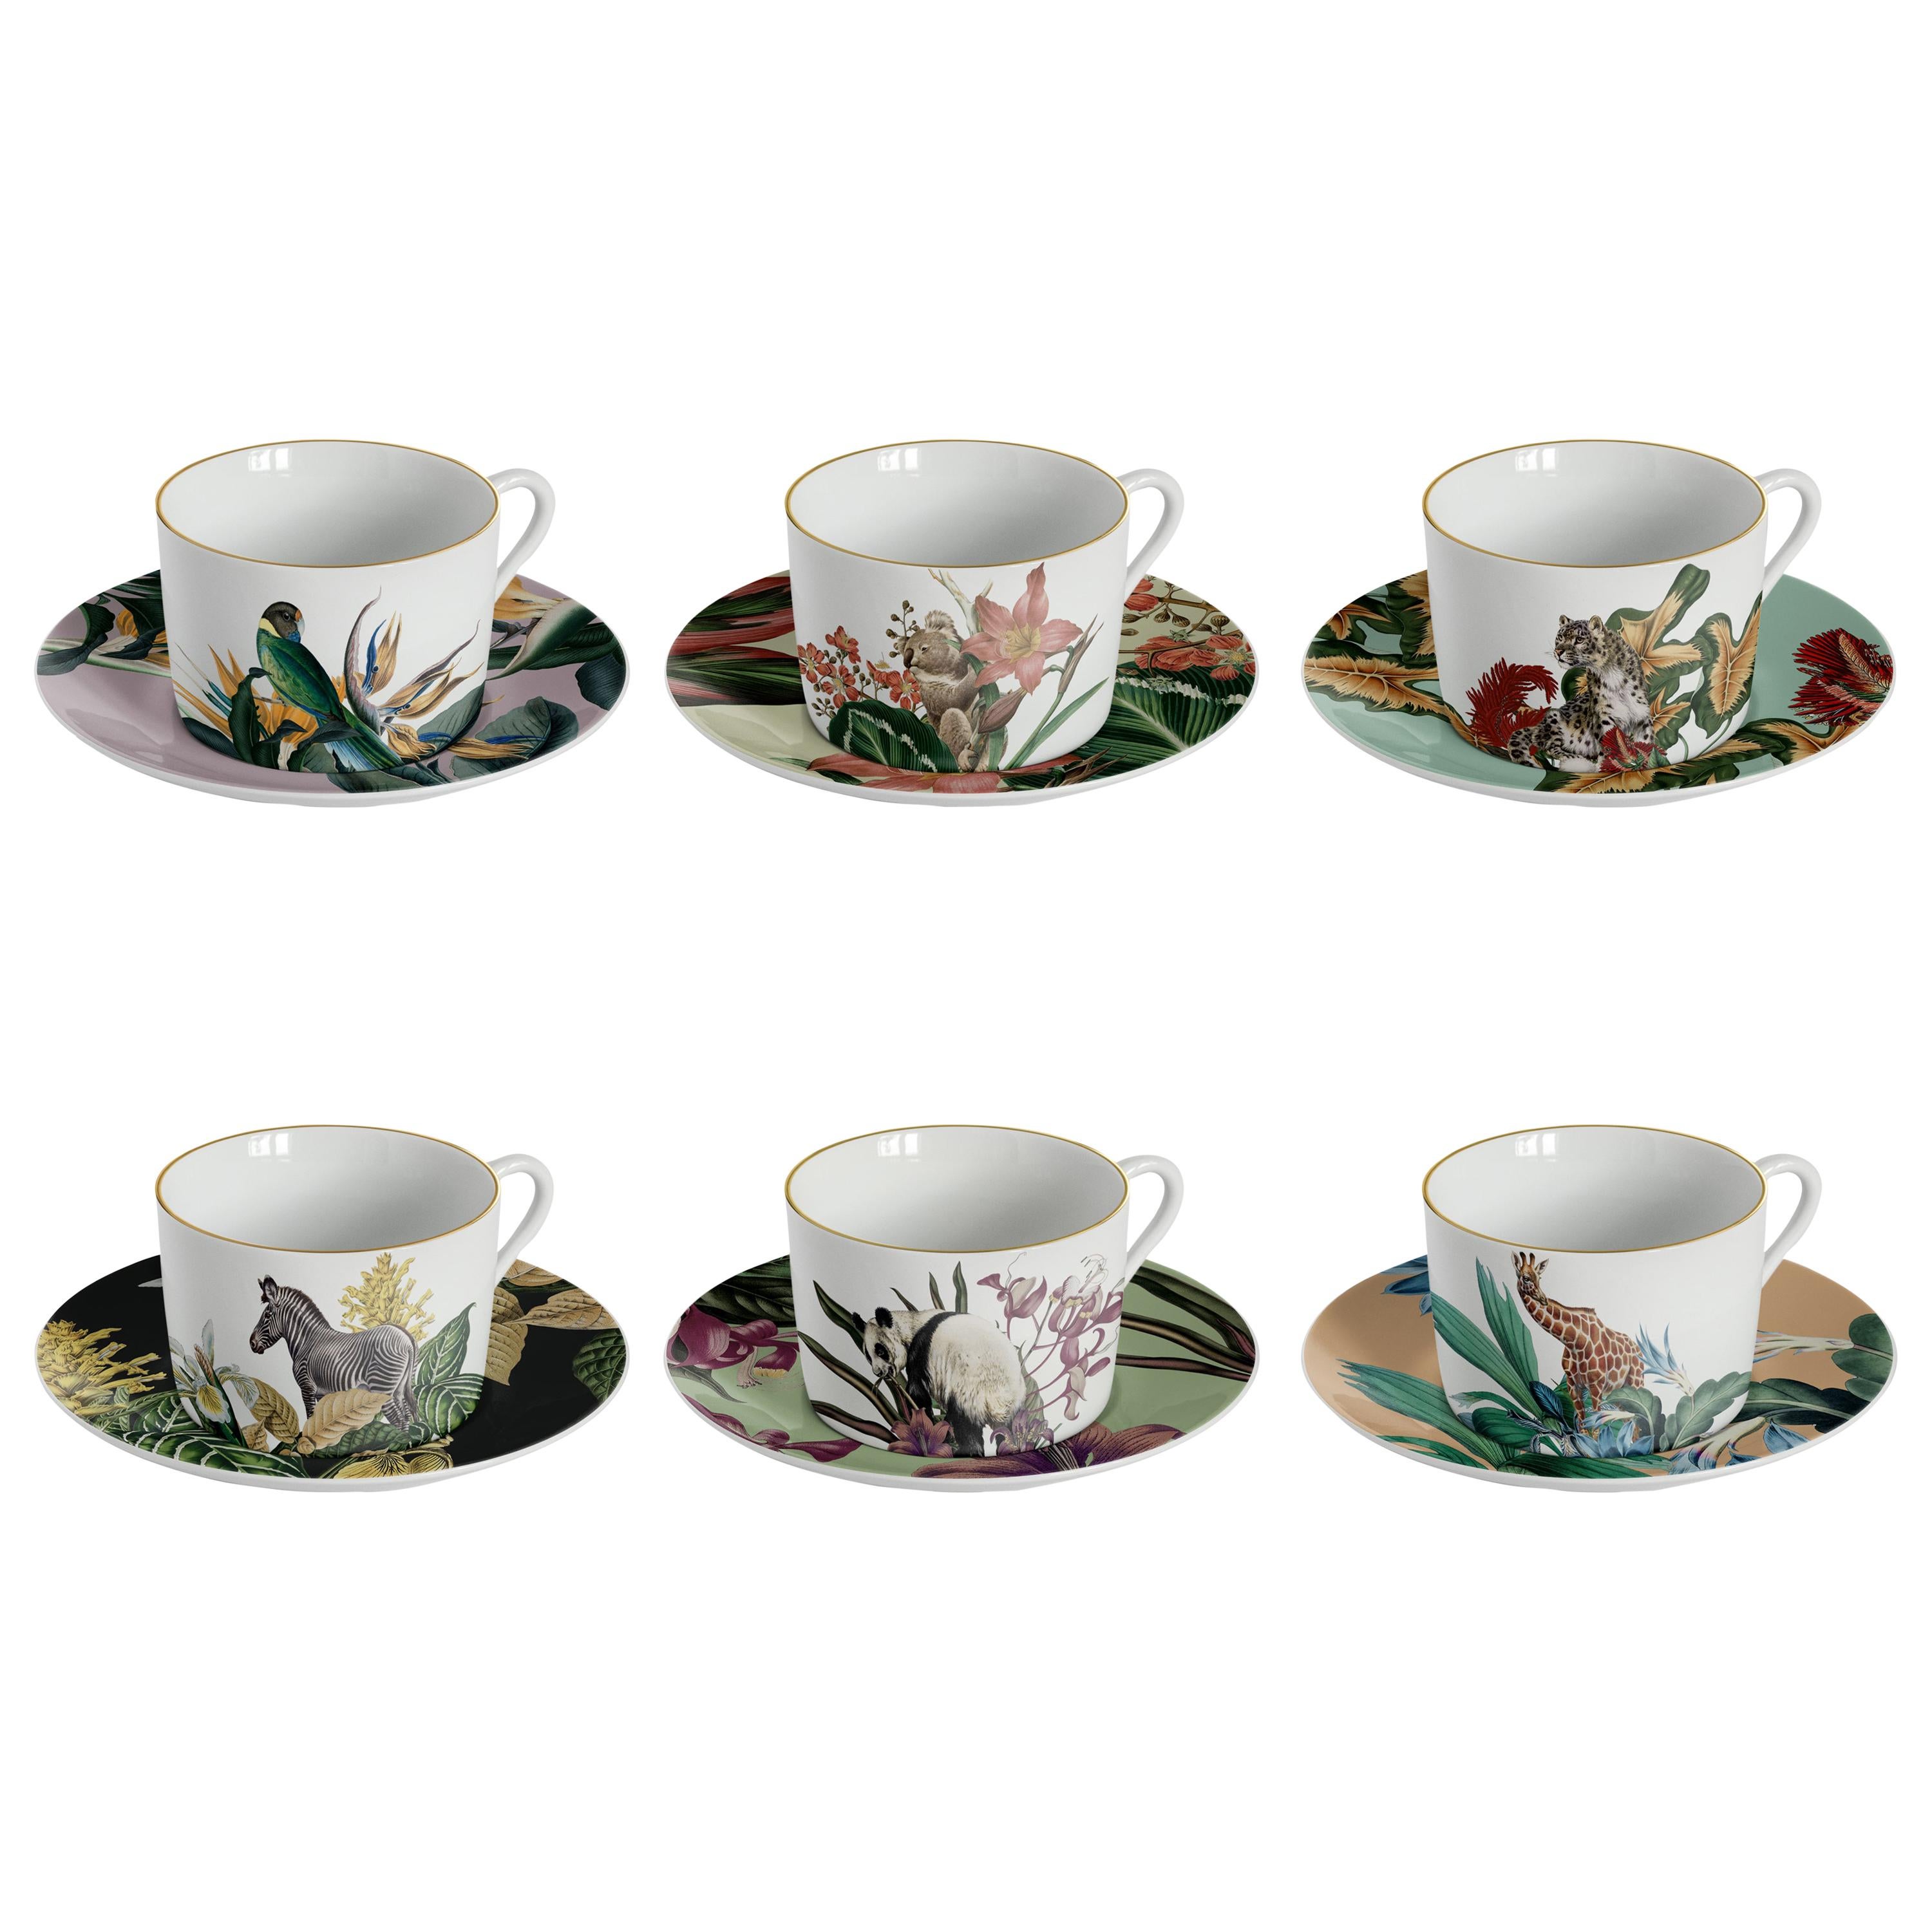 Animalia, Tea Set with Six Contemporary Porcelains with Decorative Design